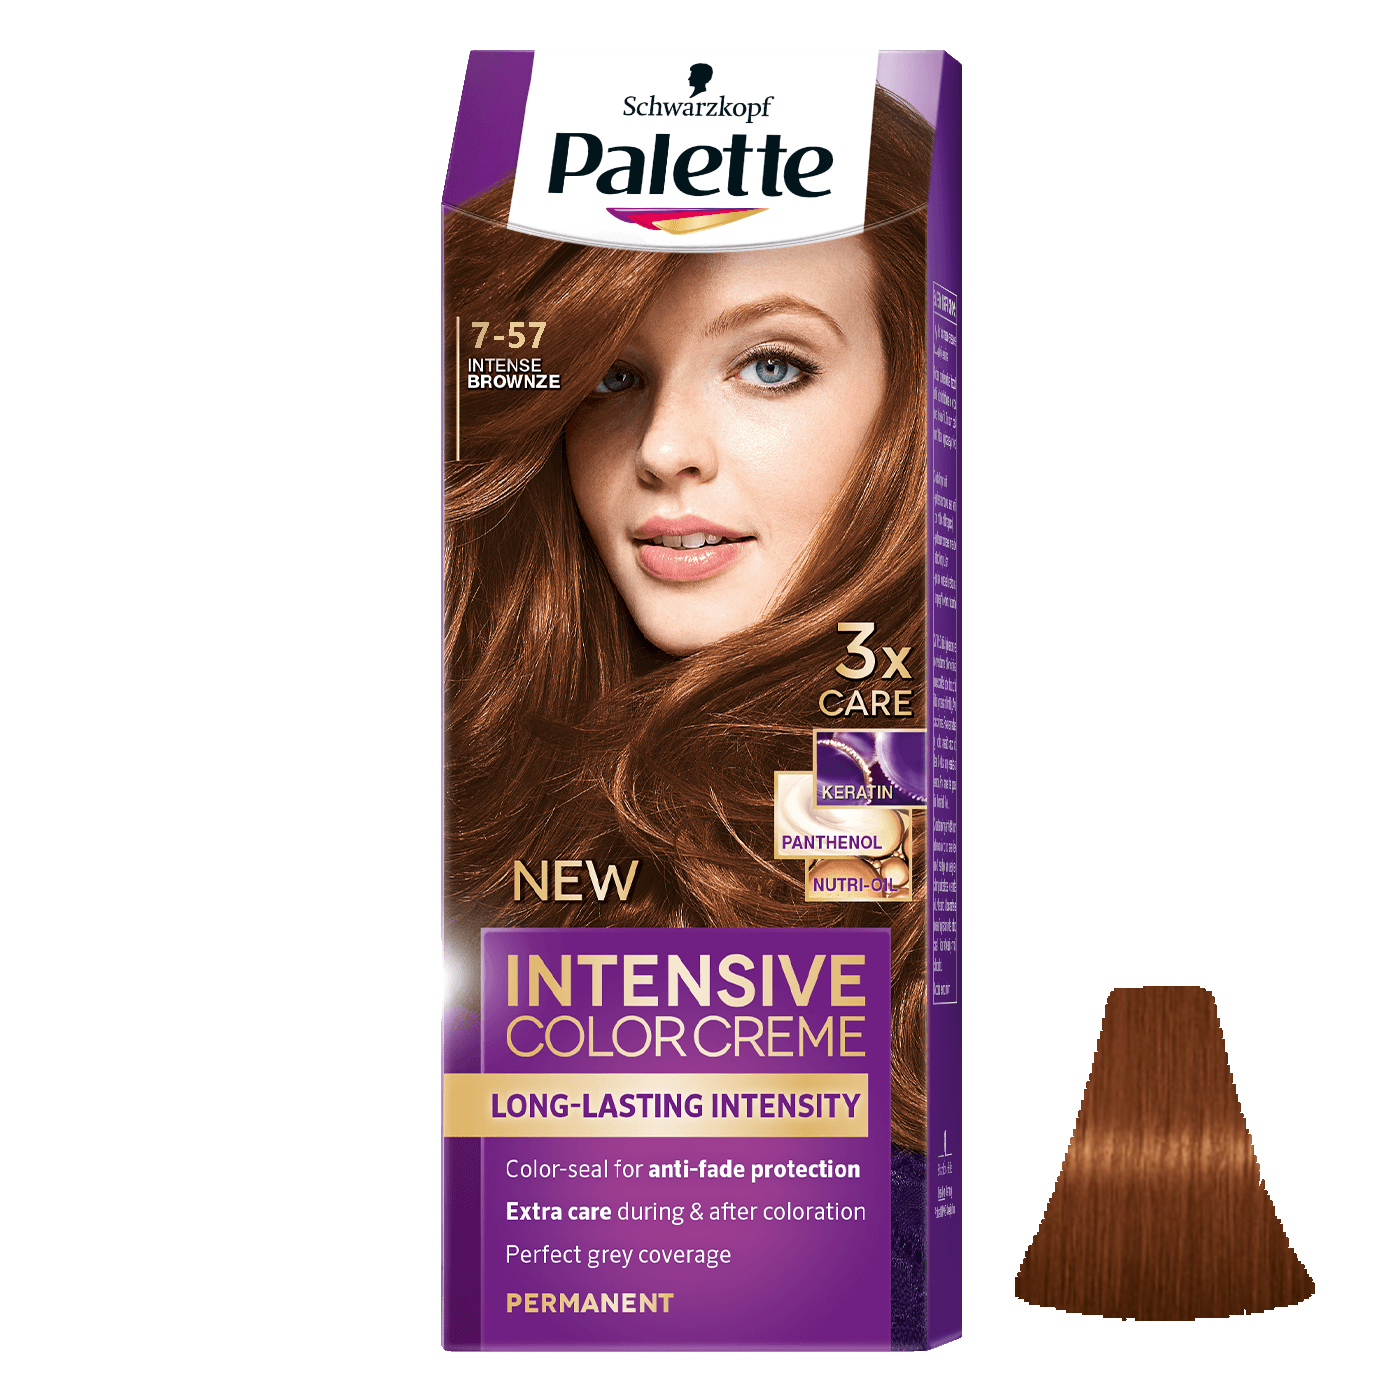 کیت رنگ مو پلت سری Intensive شماره 57-7 حجم 50 میلی لیتر رنگ برنزی